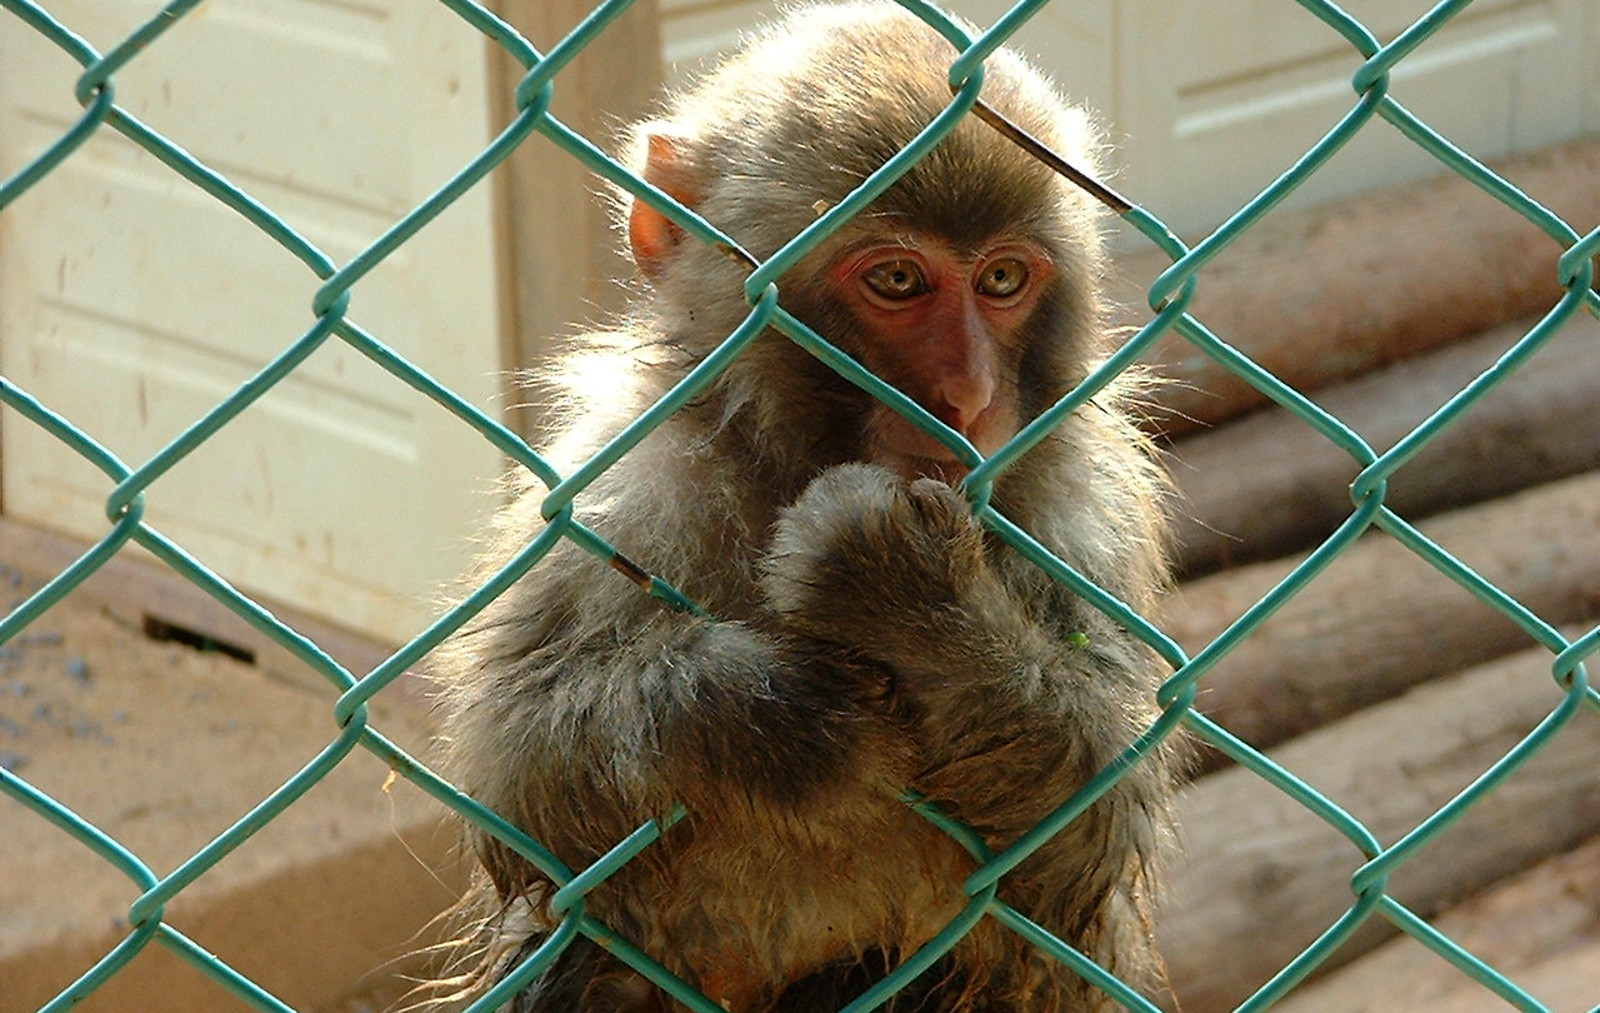 Plight of the Monkeys of Mauritius